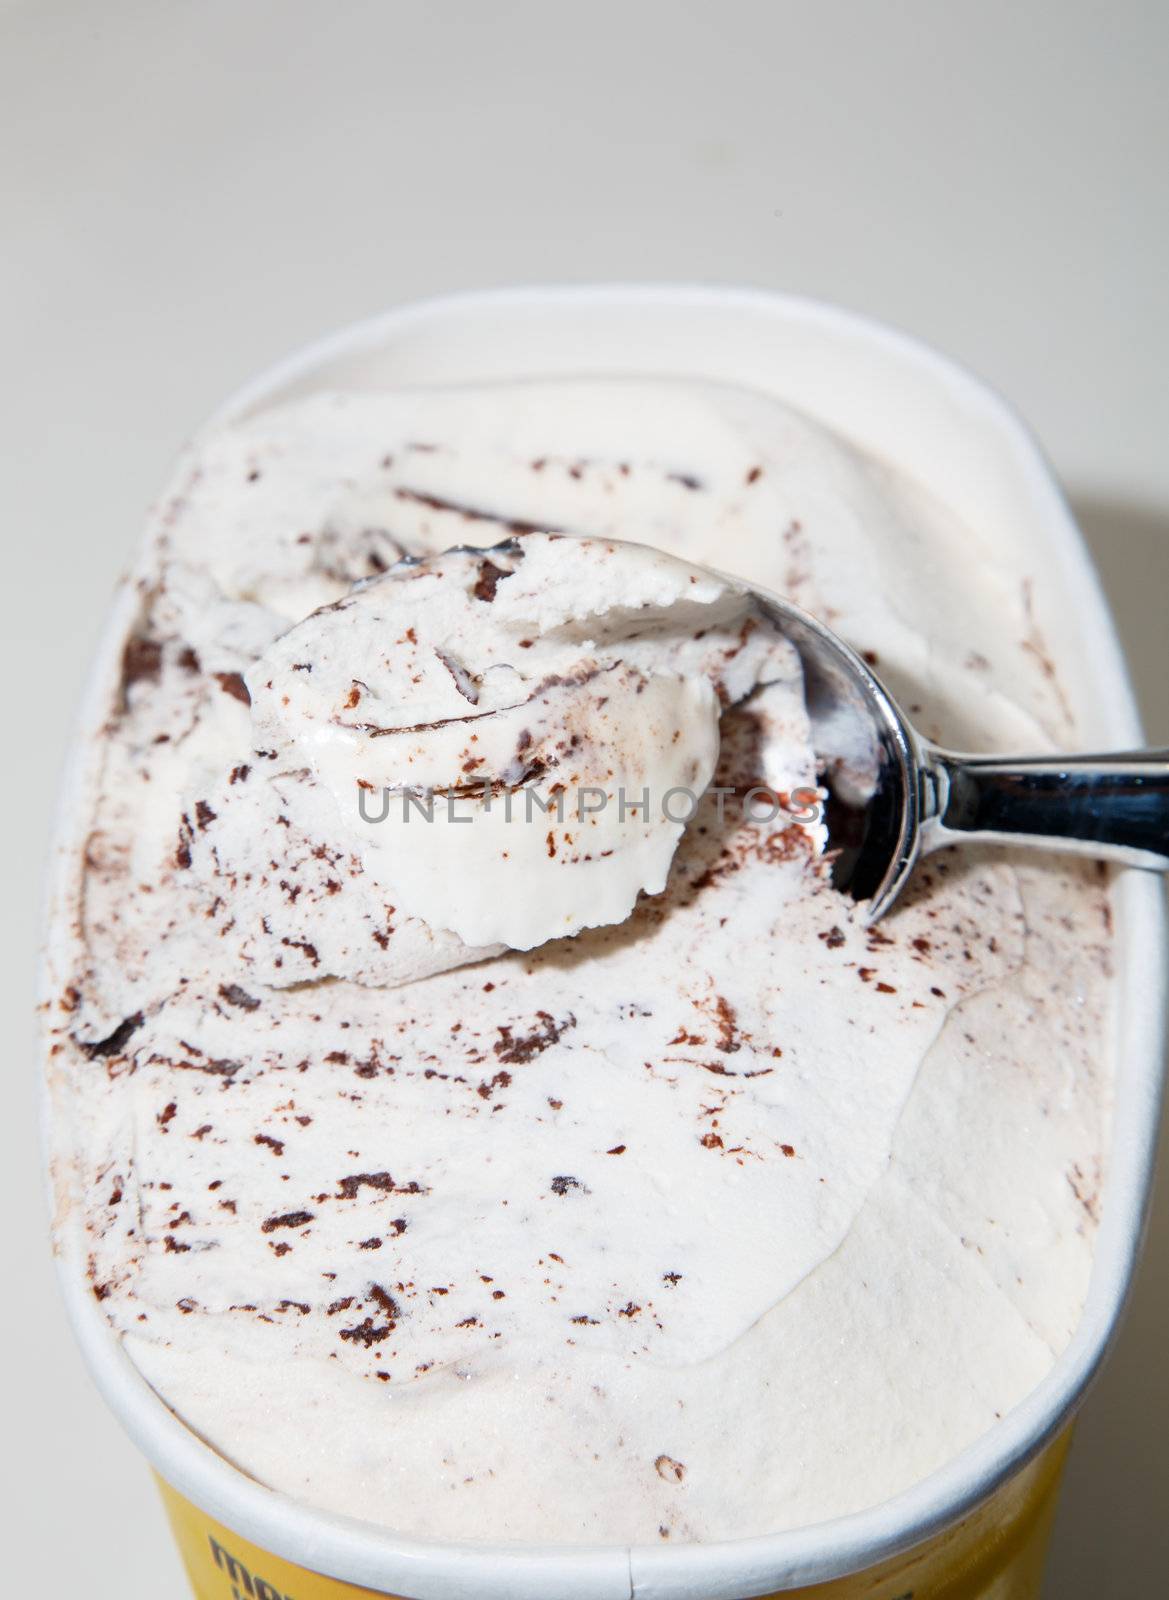 Carton of chocolate chip ice cream with ice cream scoop